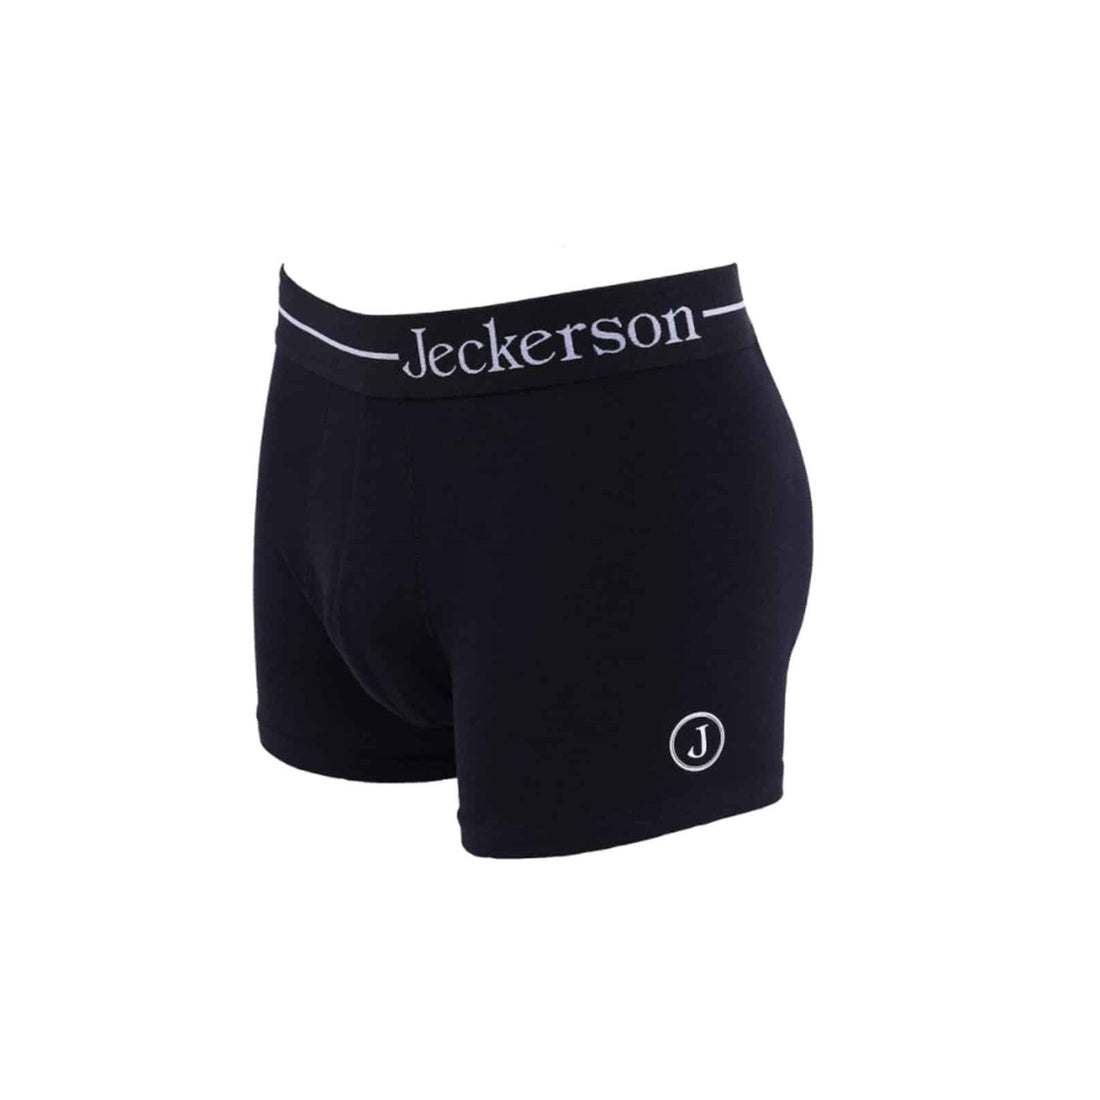 Jeckerson Boxershorts